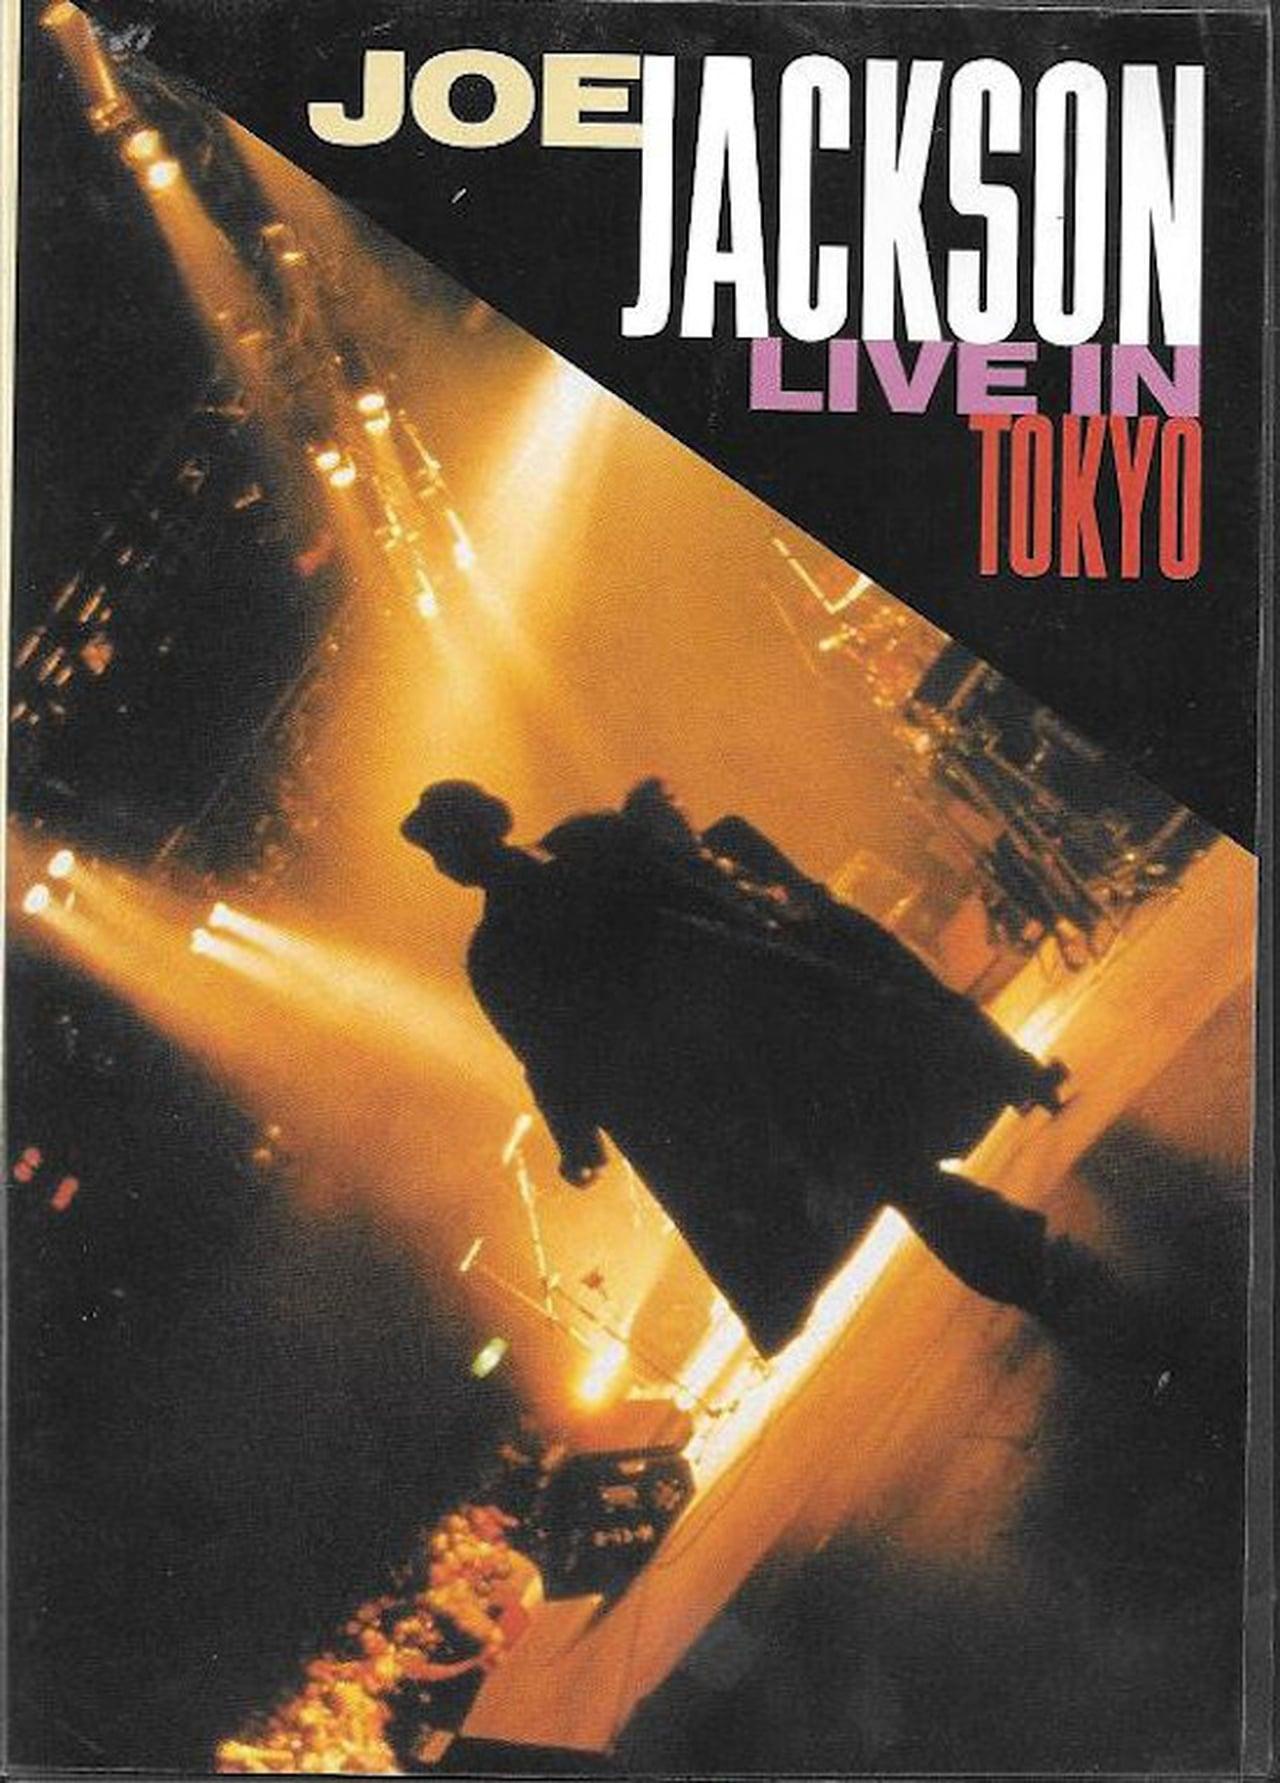 Joe Jackson: Live in Tokyo poster